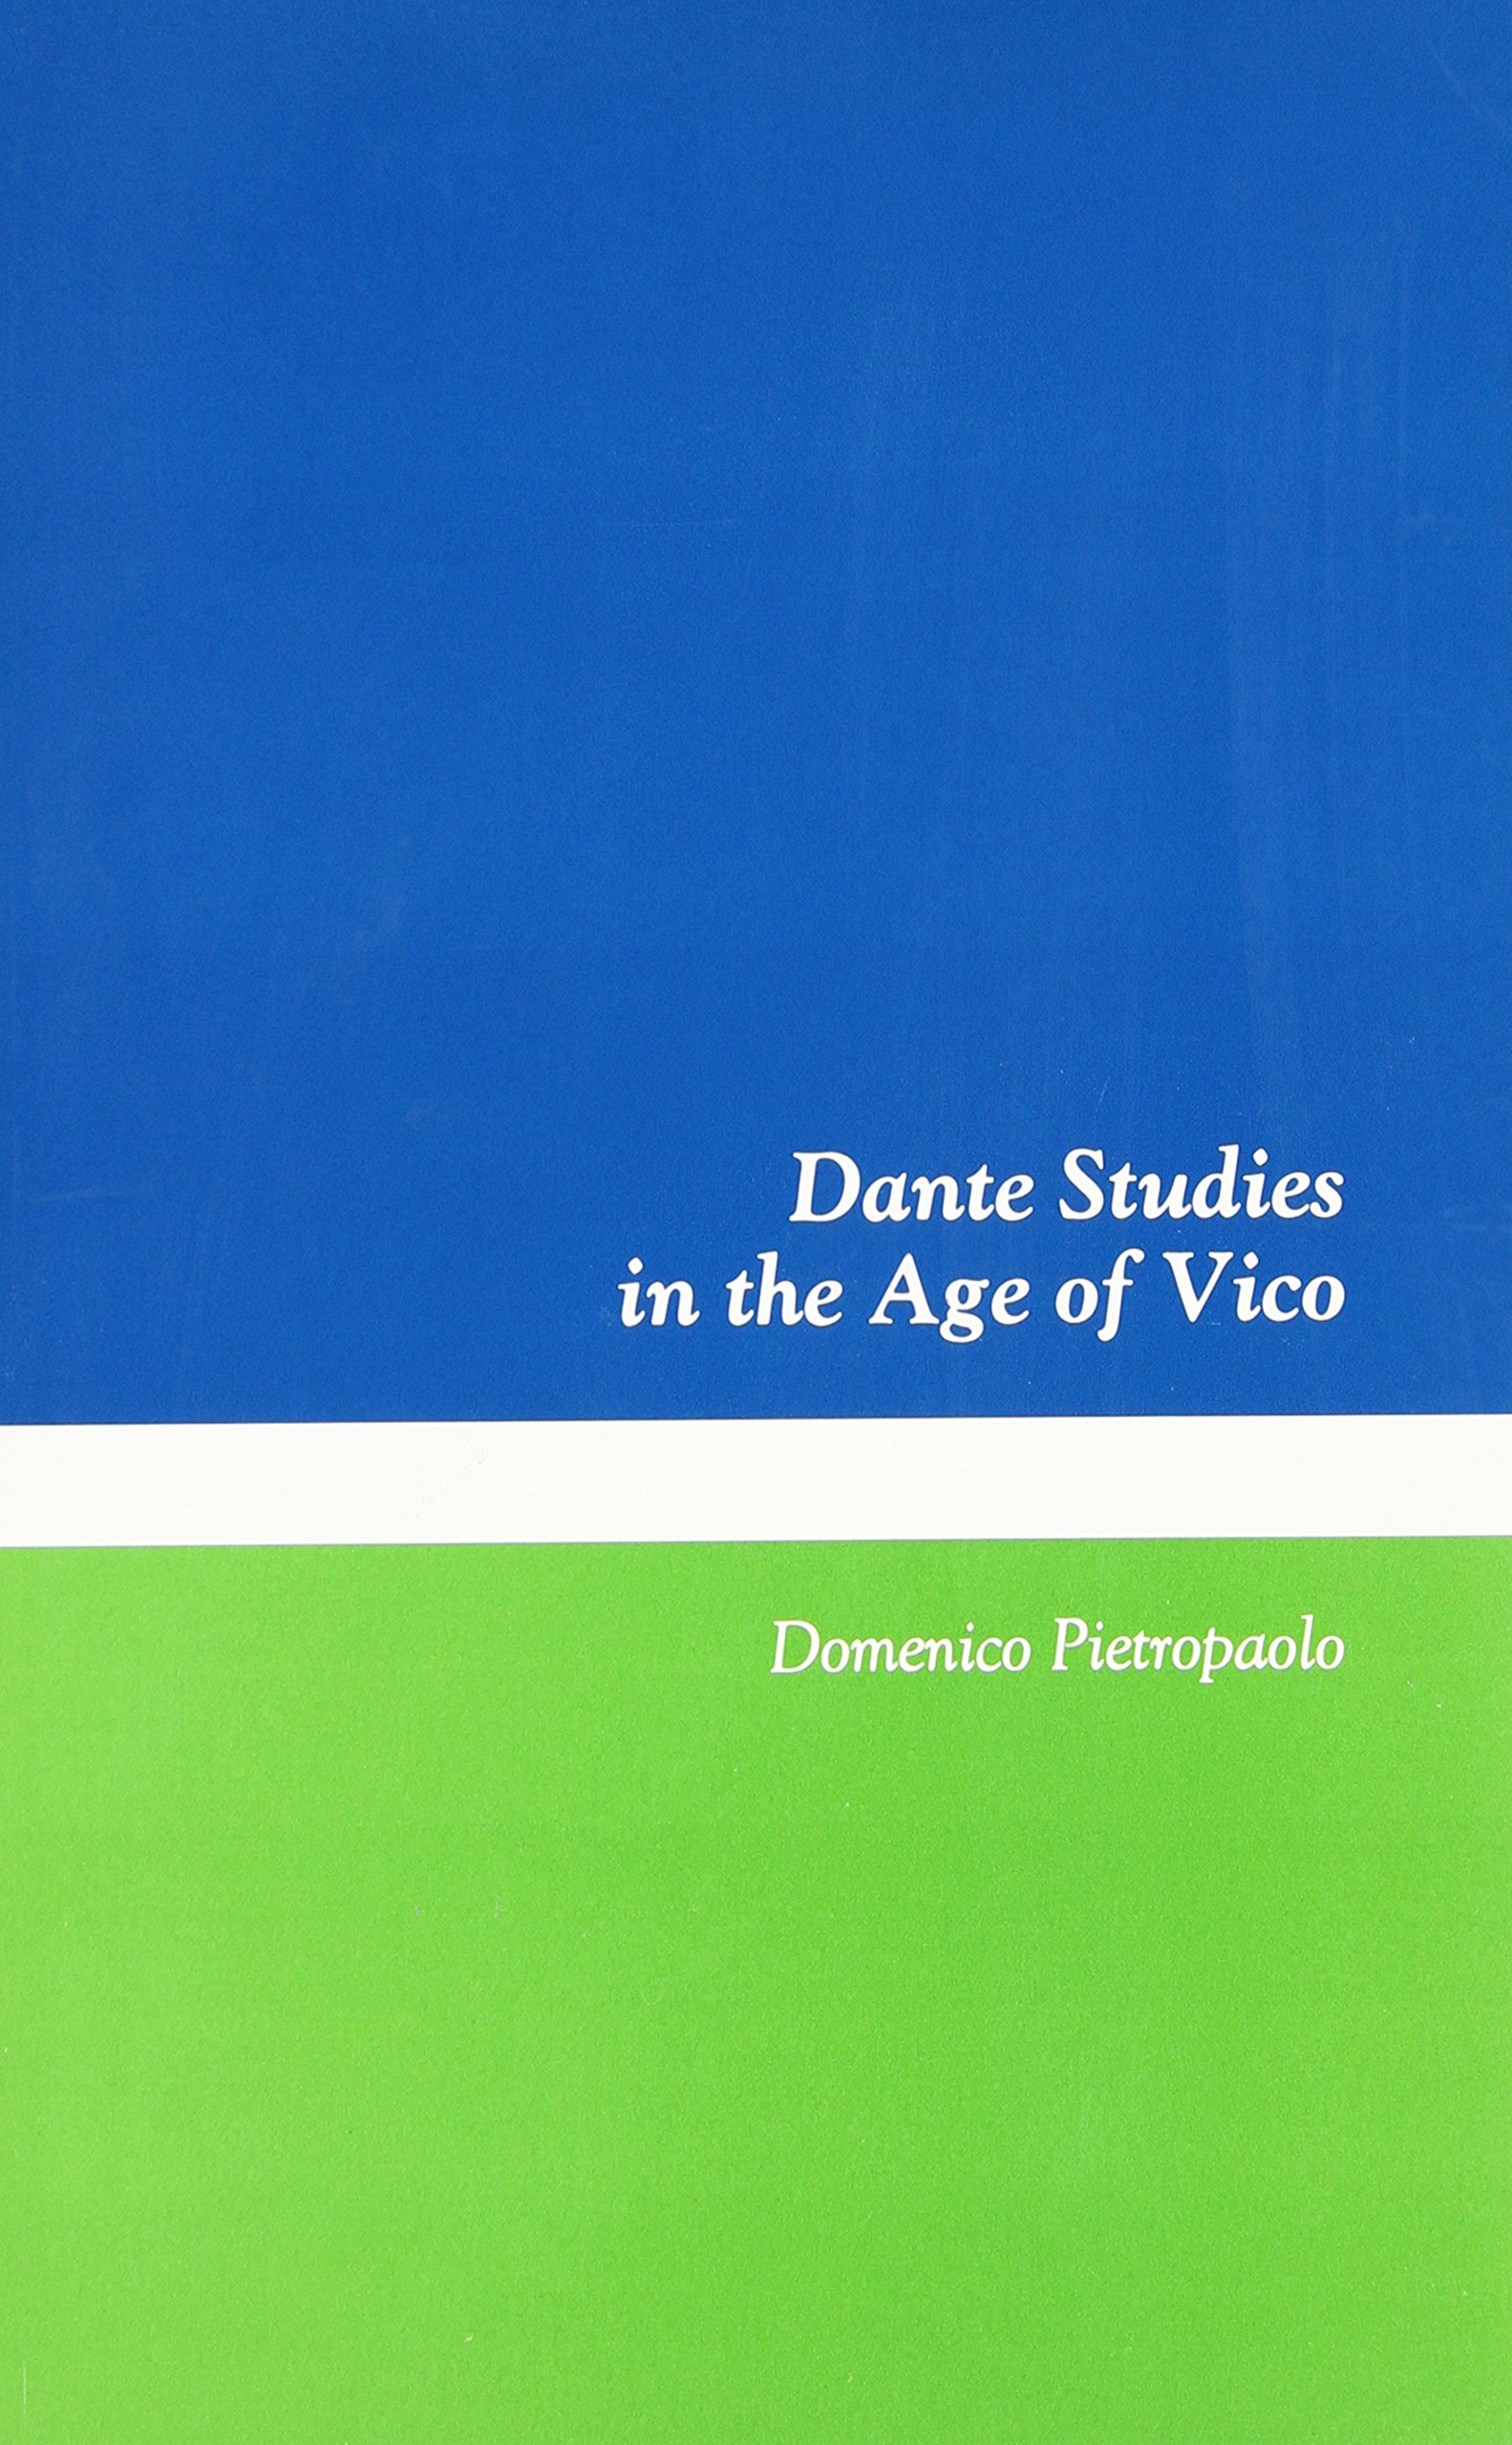 Dante studies in the age of Vico